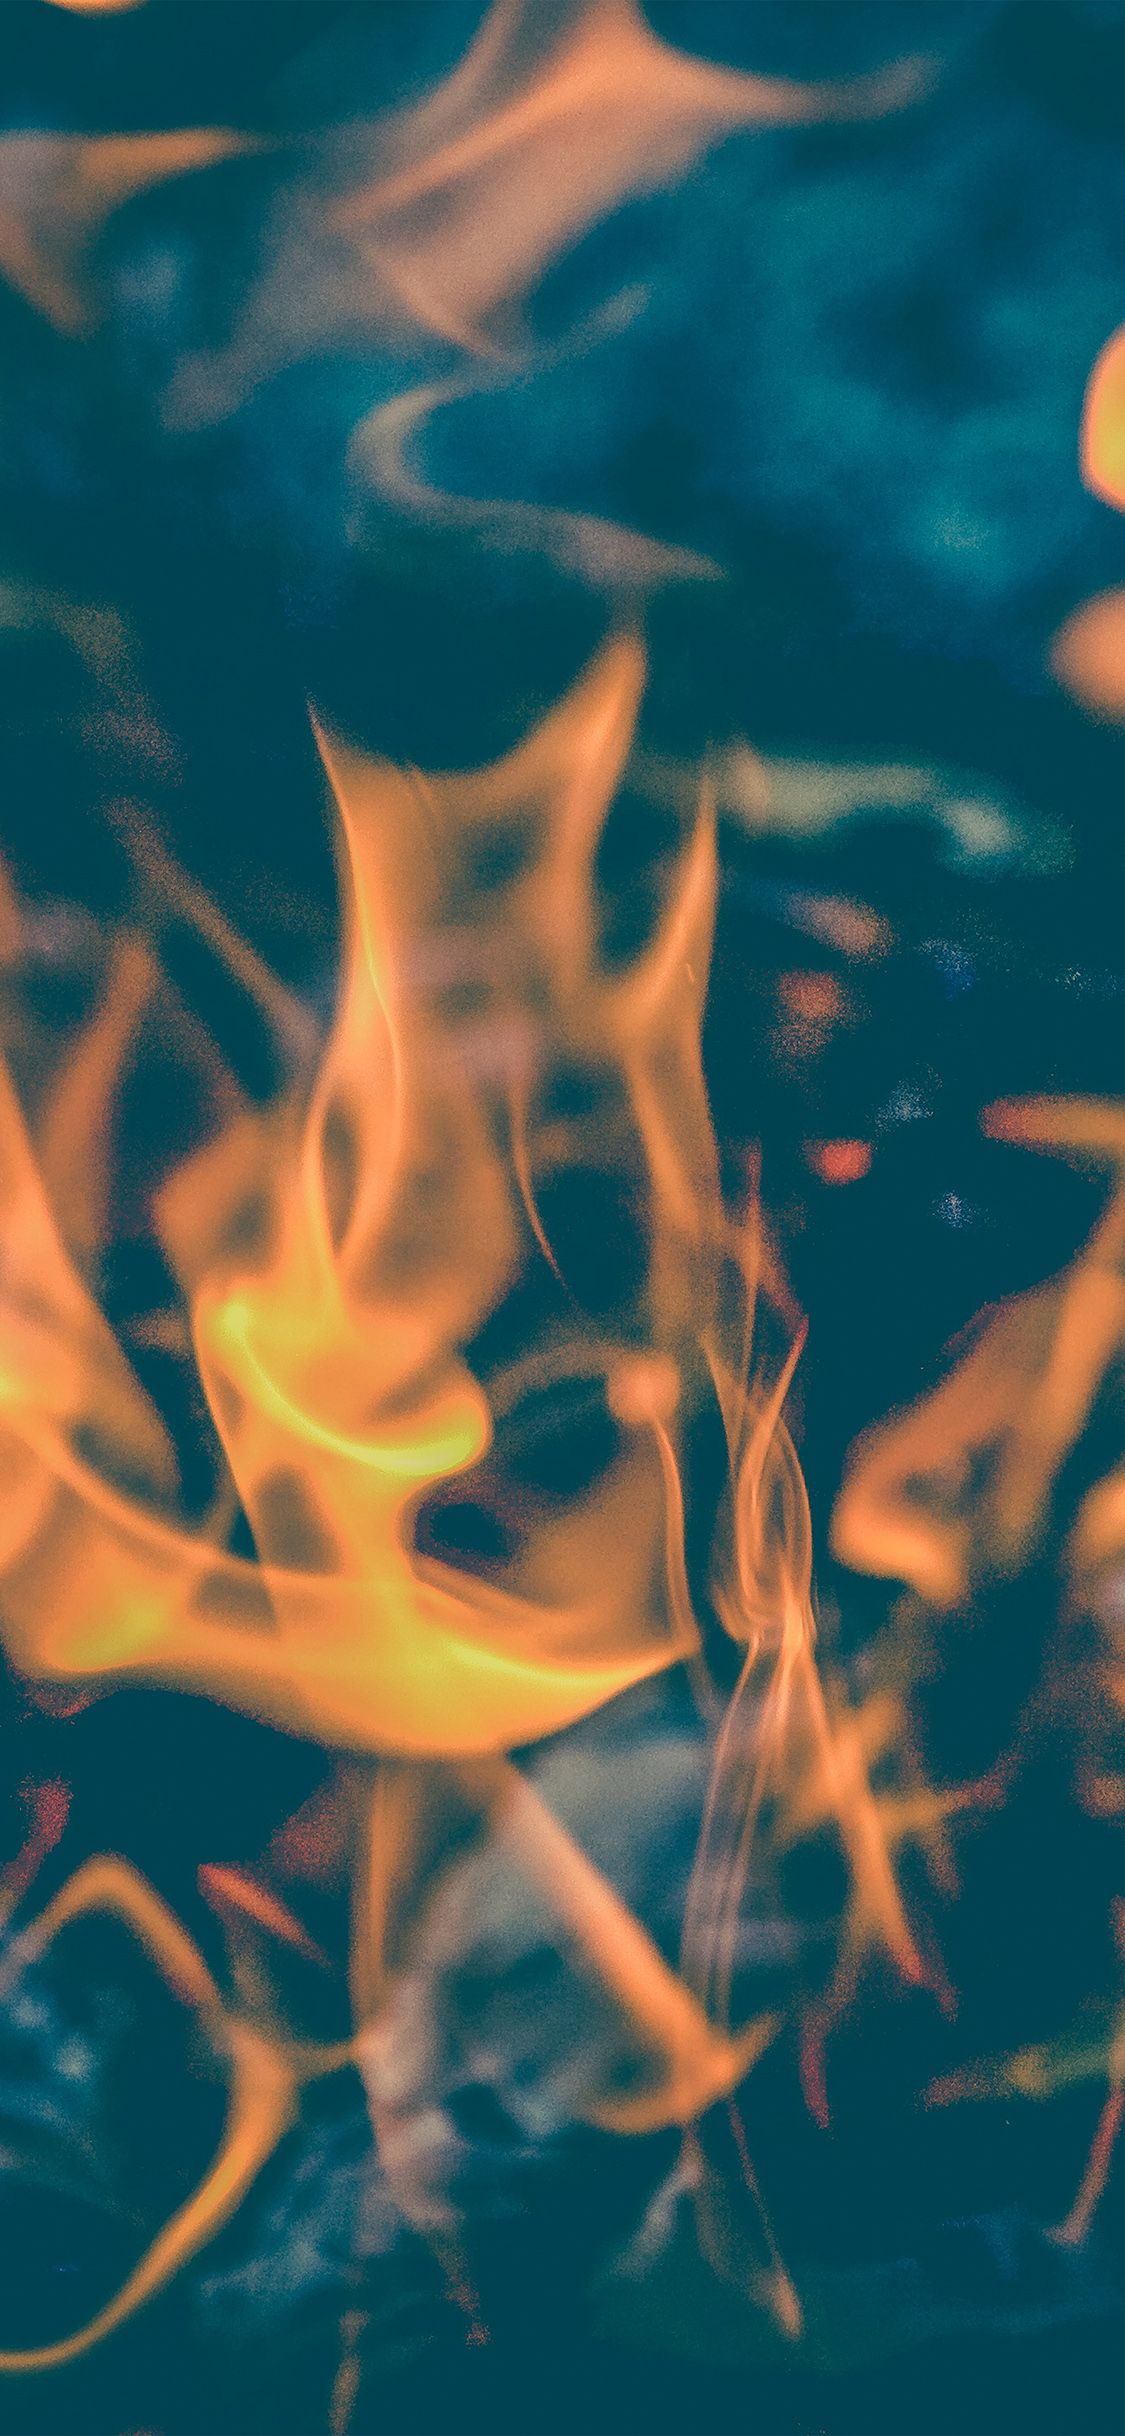 iPhone X wallpaper. fire zoom closeup